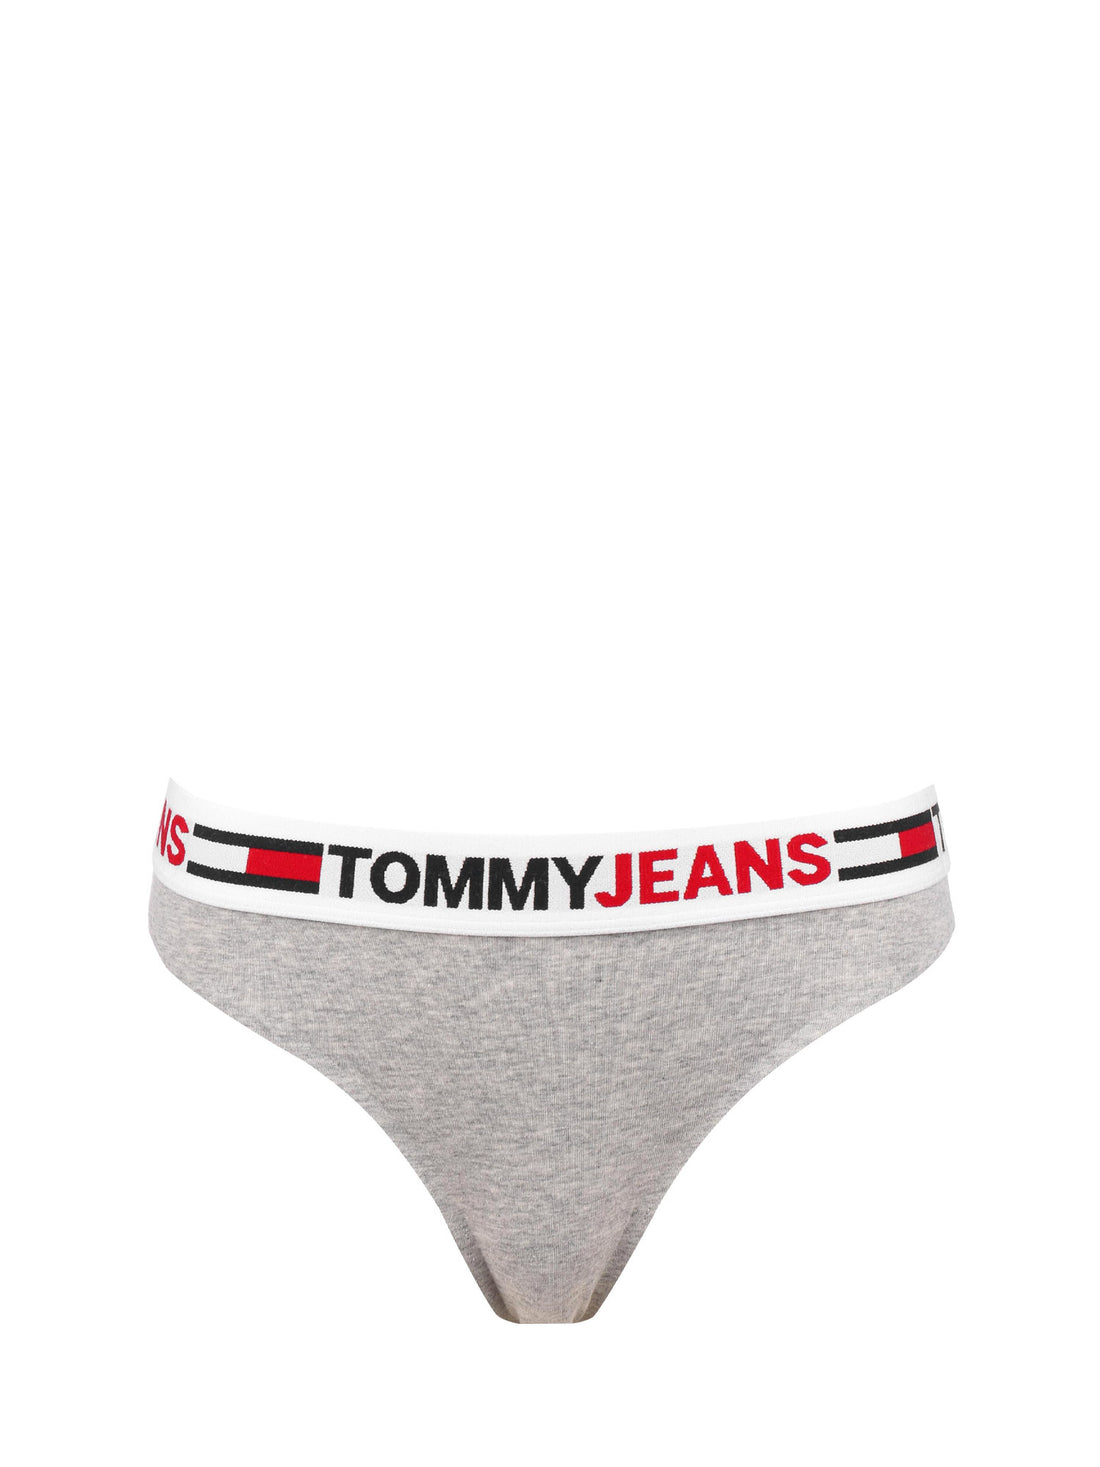 Perizomi Grigio Tommy Hilfiger Underwear